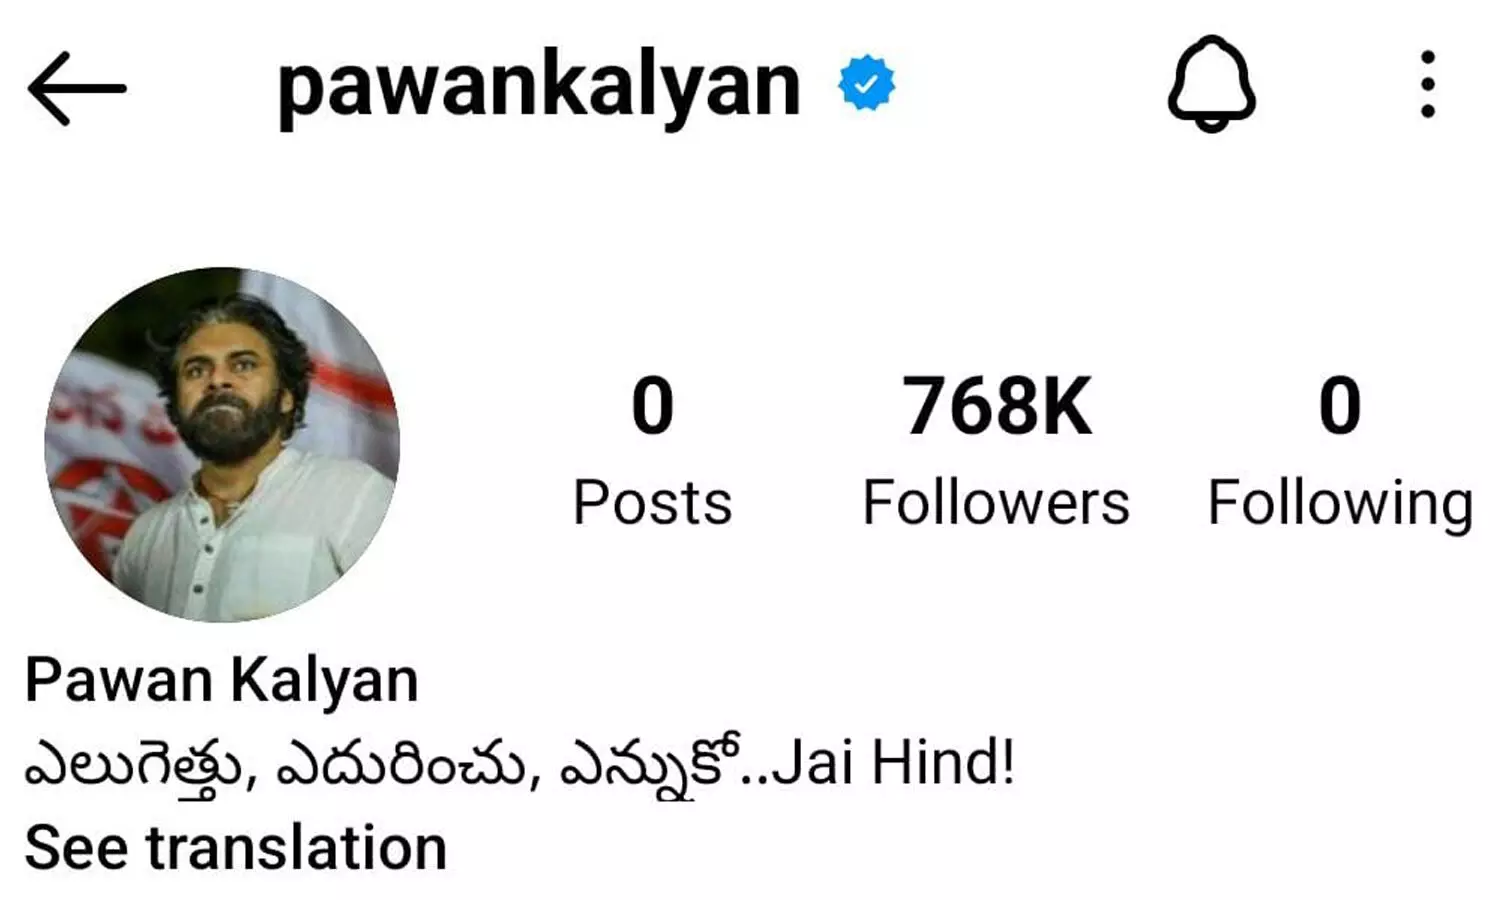 Powerstar Pawan Kalyan makes Instagram debut, gains 713K followers in two hours